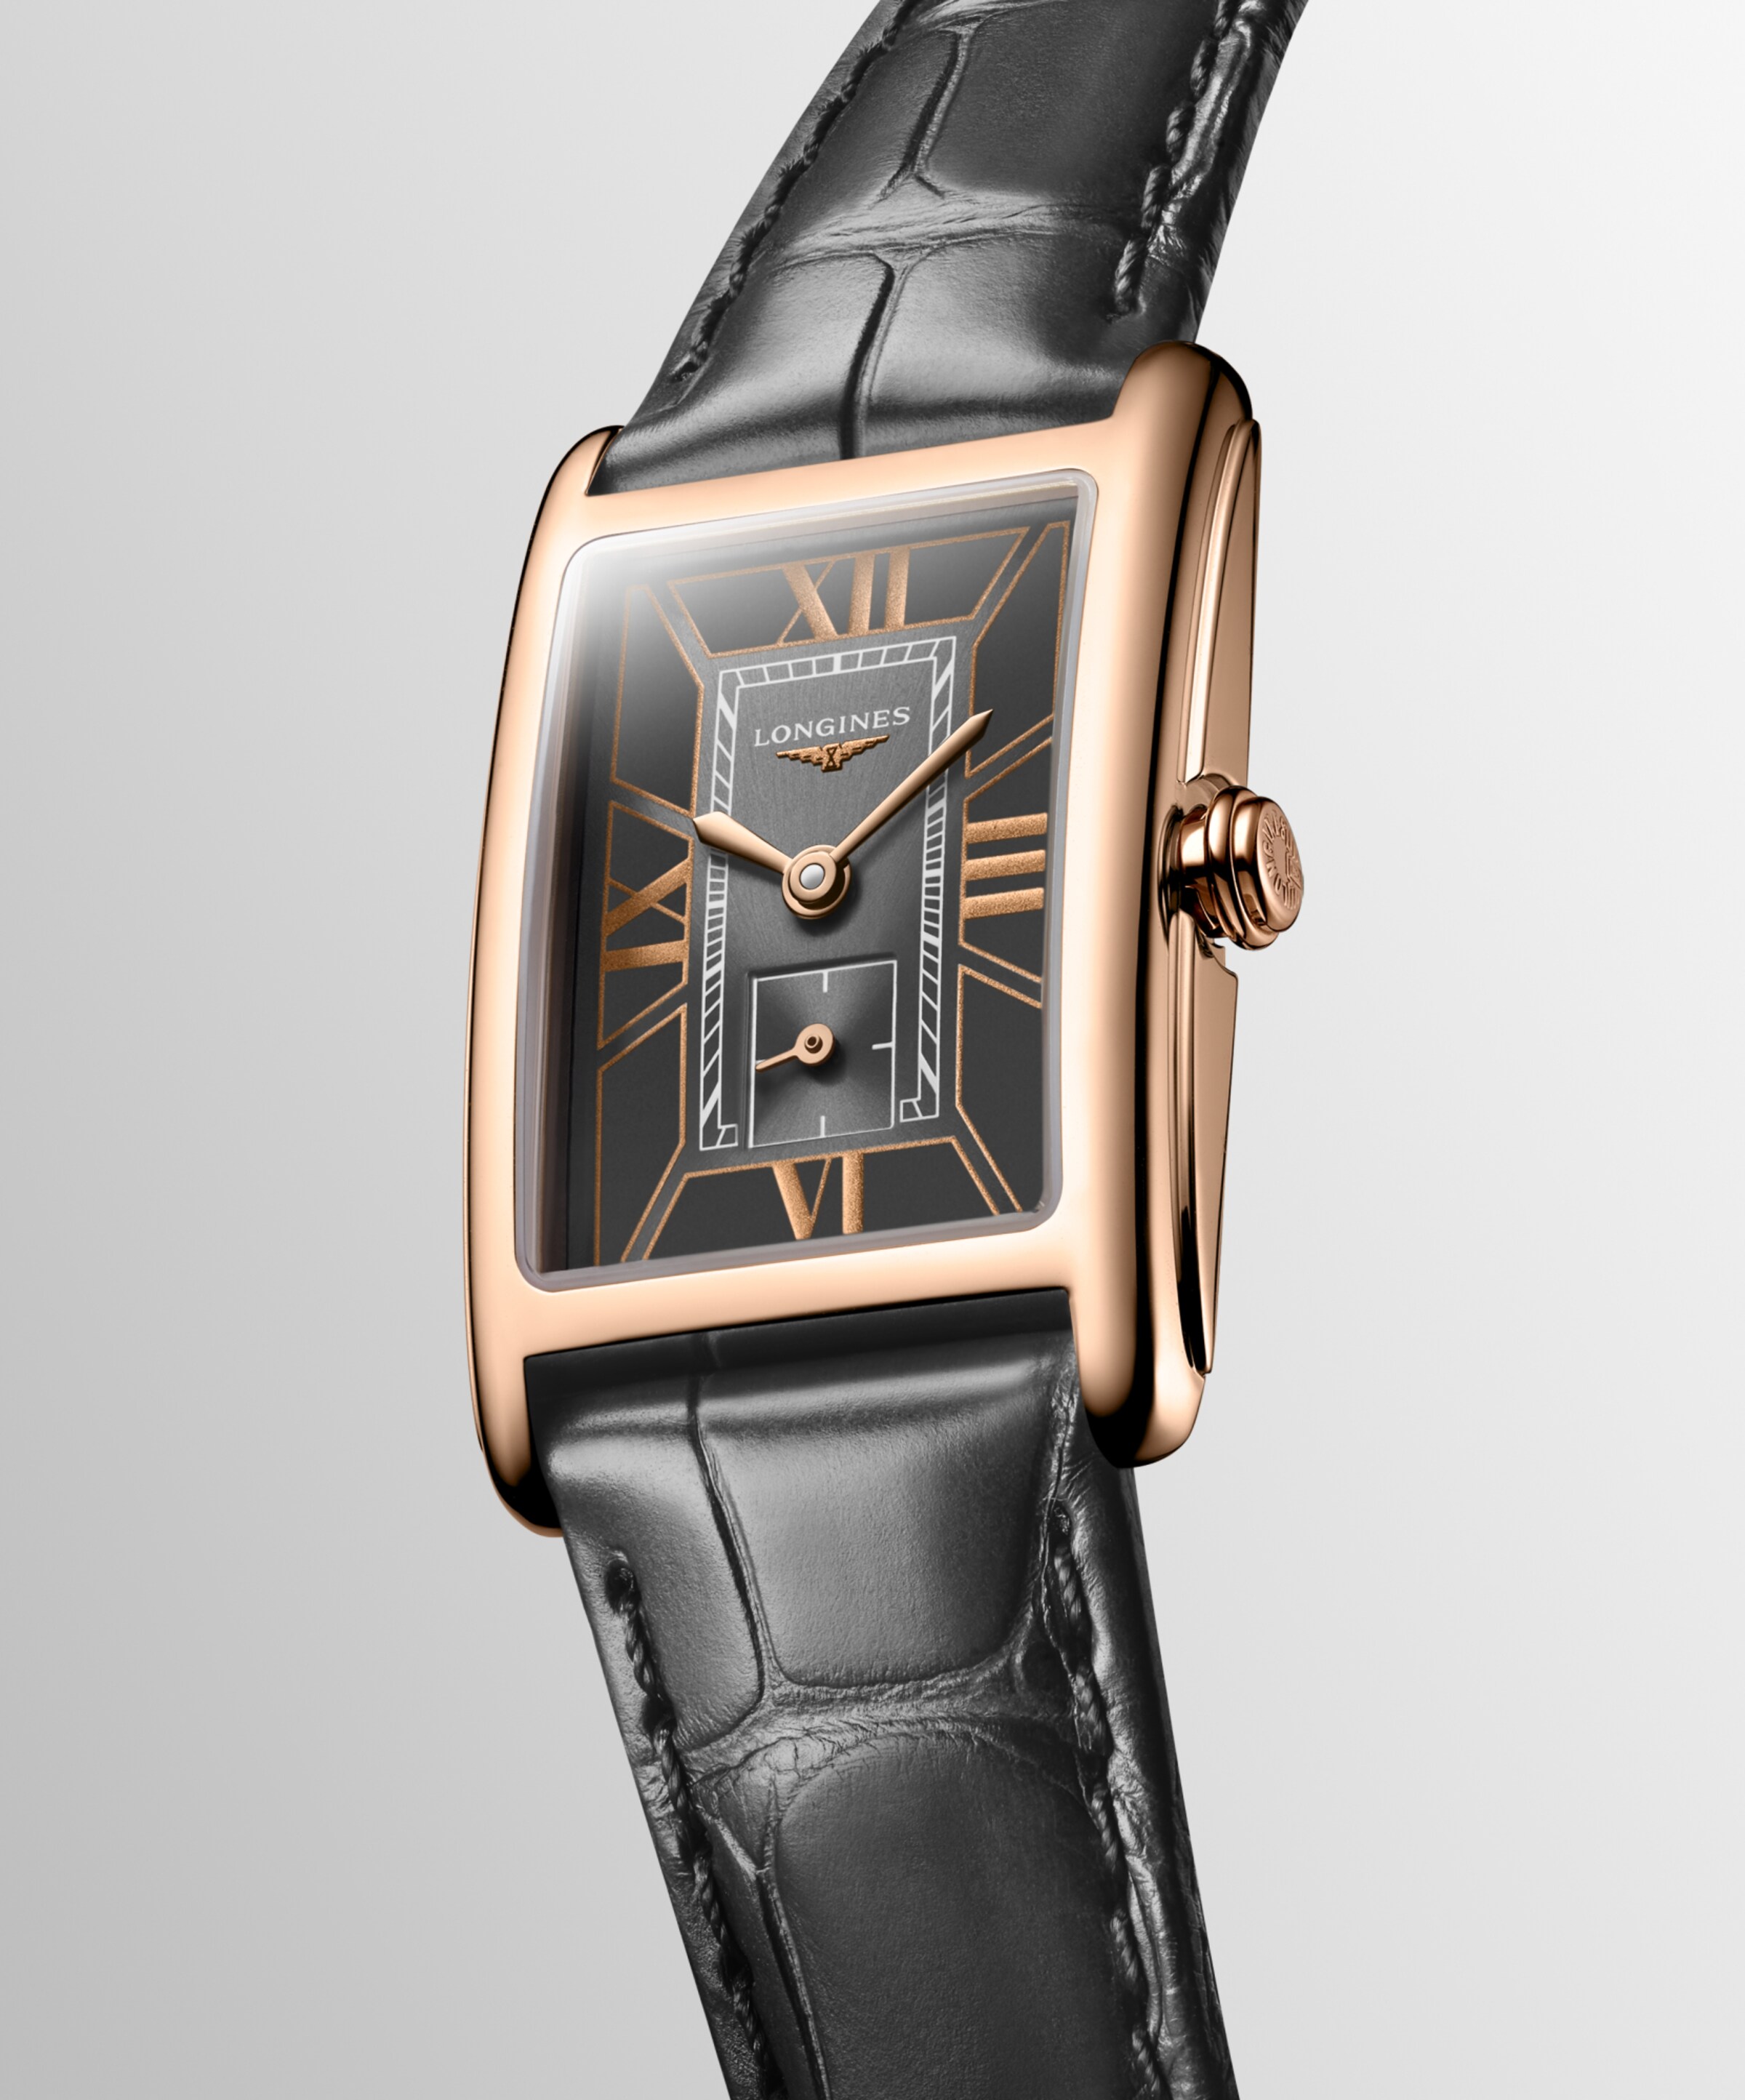 Longines DOLCEVITA Quartz 18 karat pink gold Watch - L5.255.8.75.2